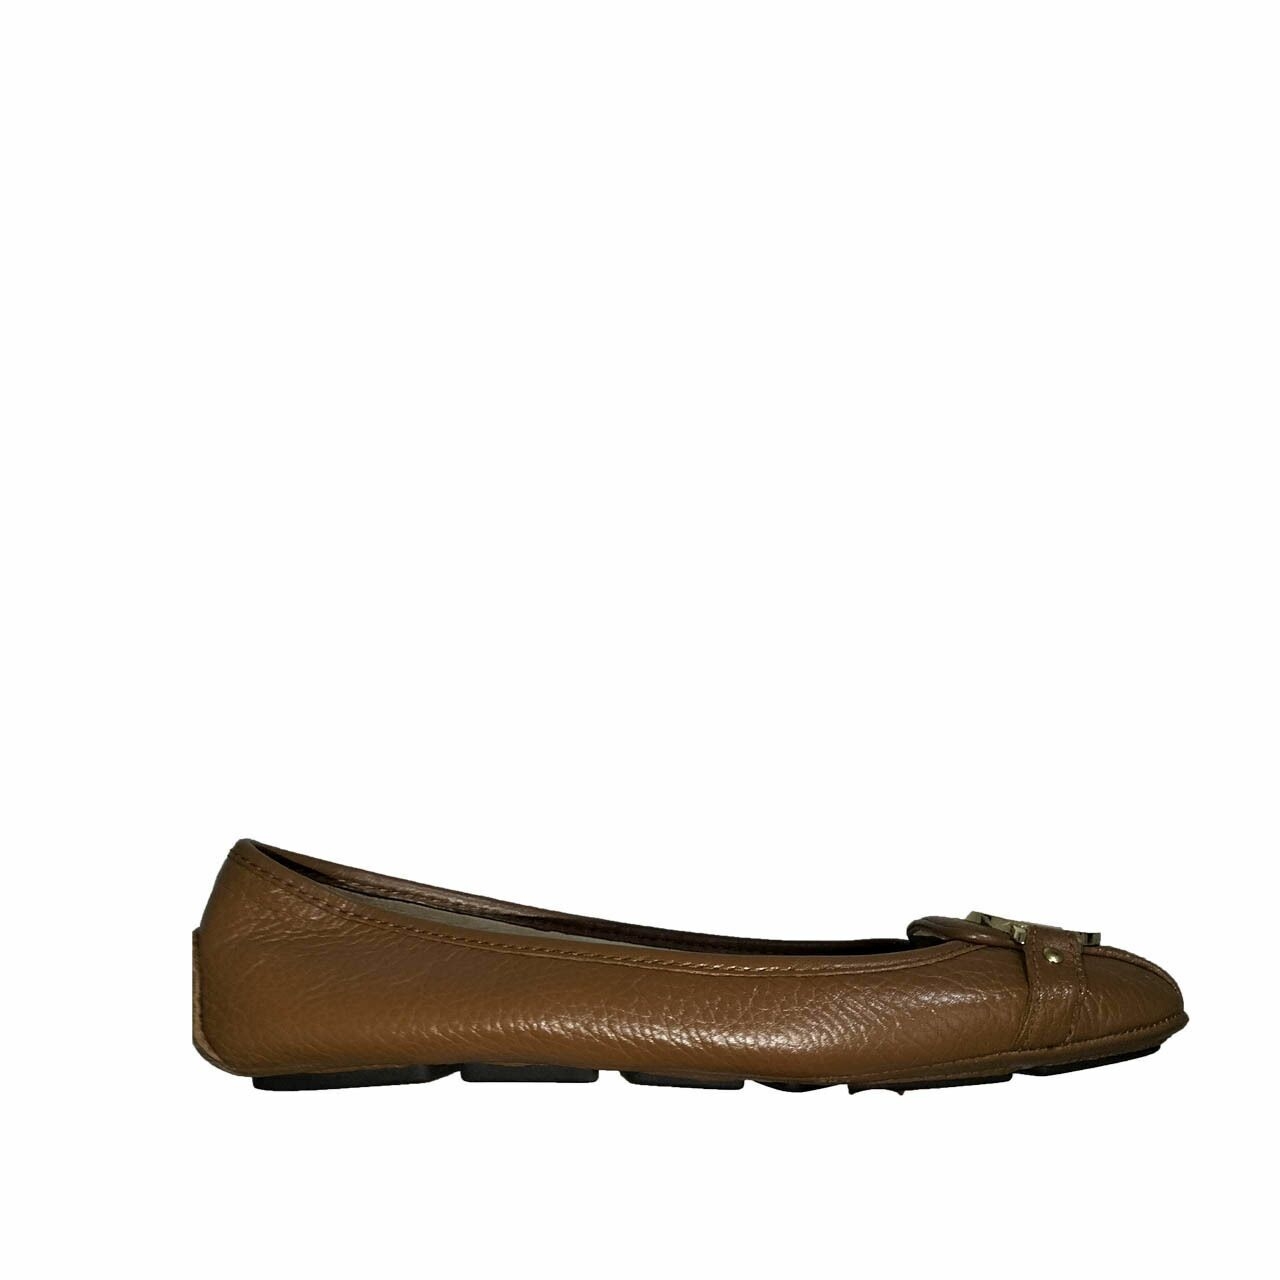 Michael Kors Fulton Flat Shoes in Brown